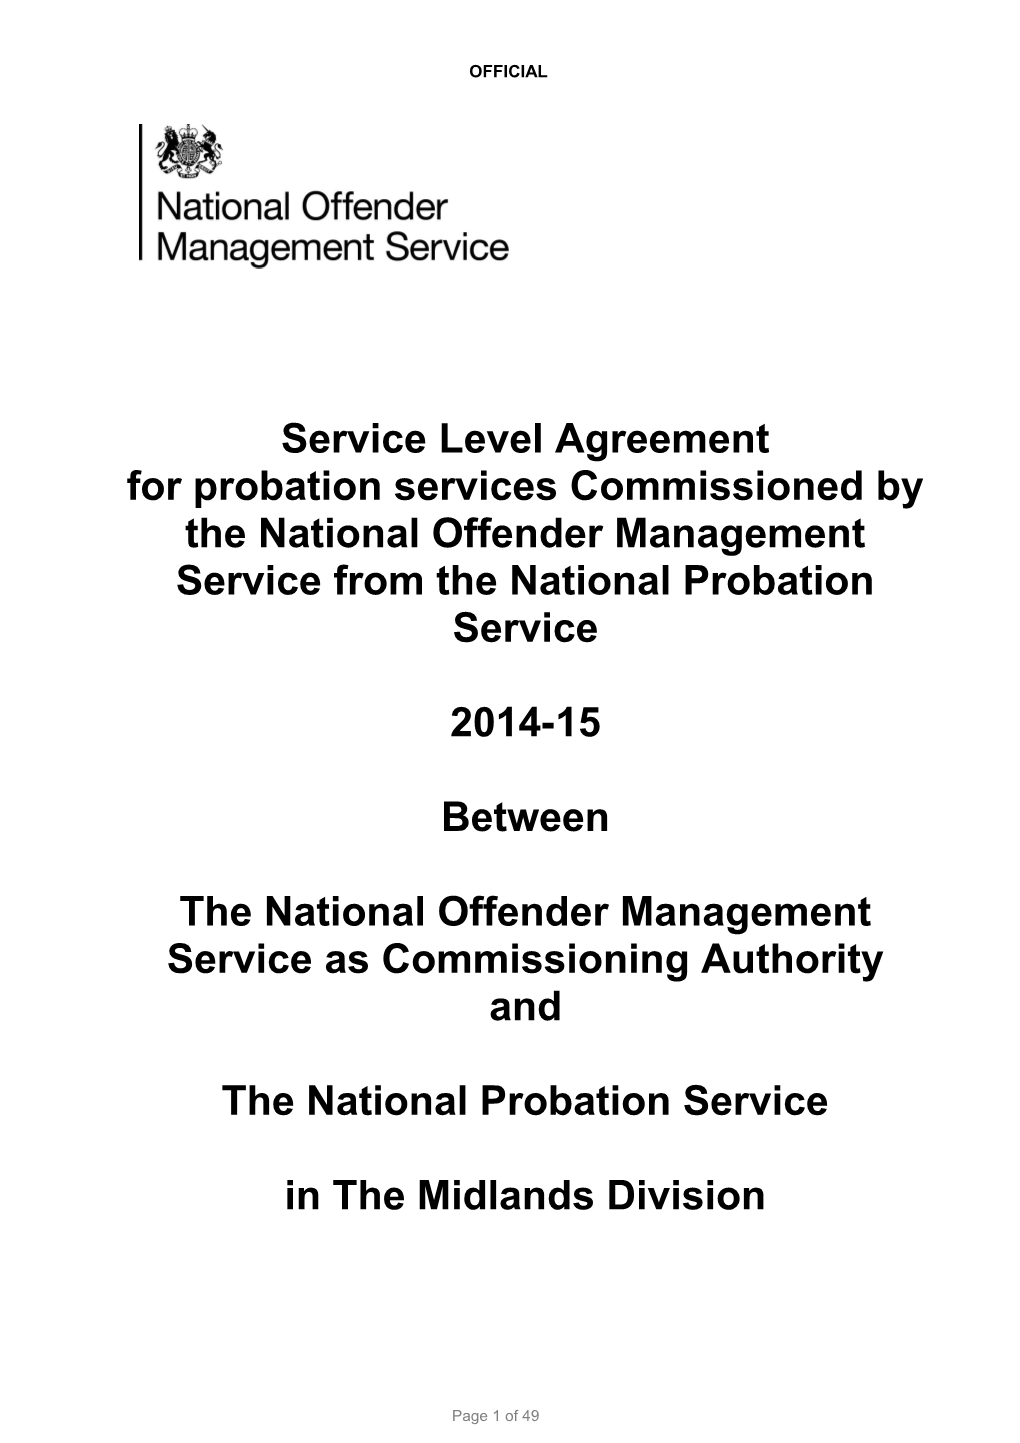 NPS Service Level Agreement 2014-15 Midlands